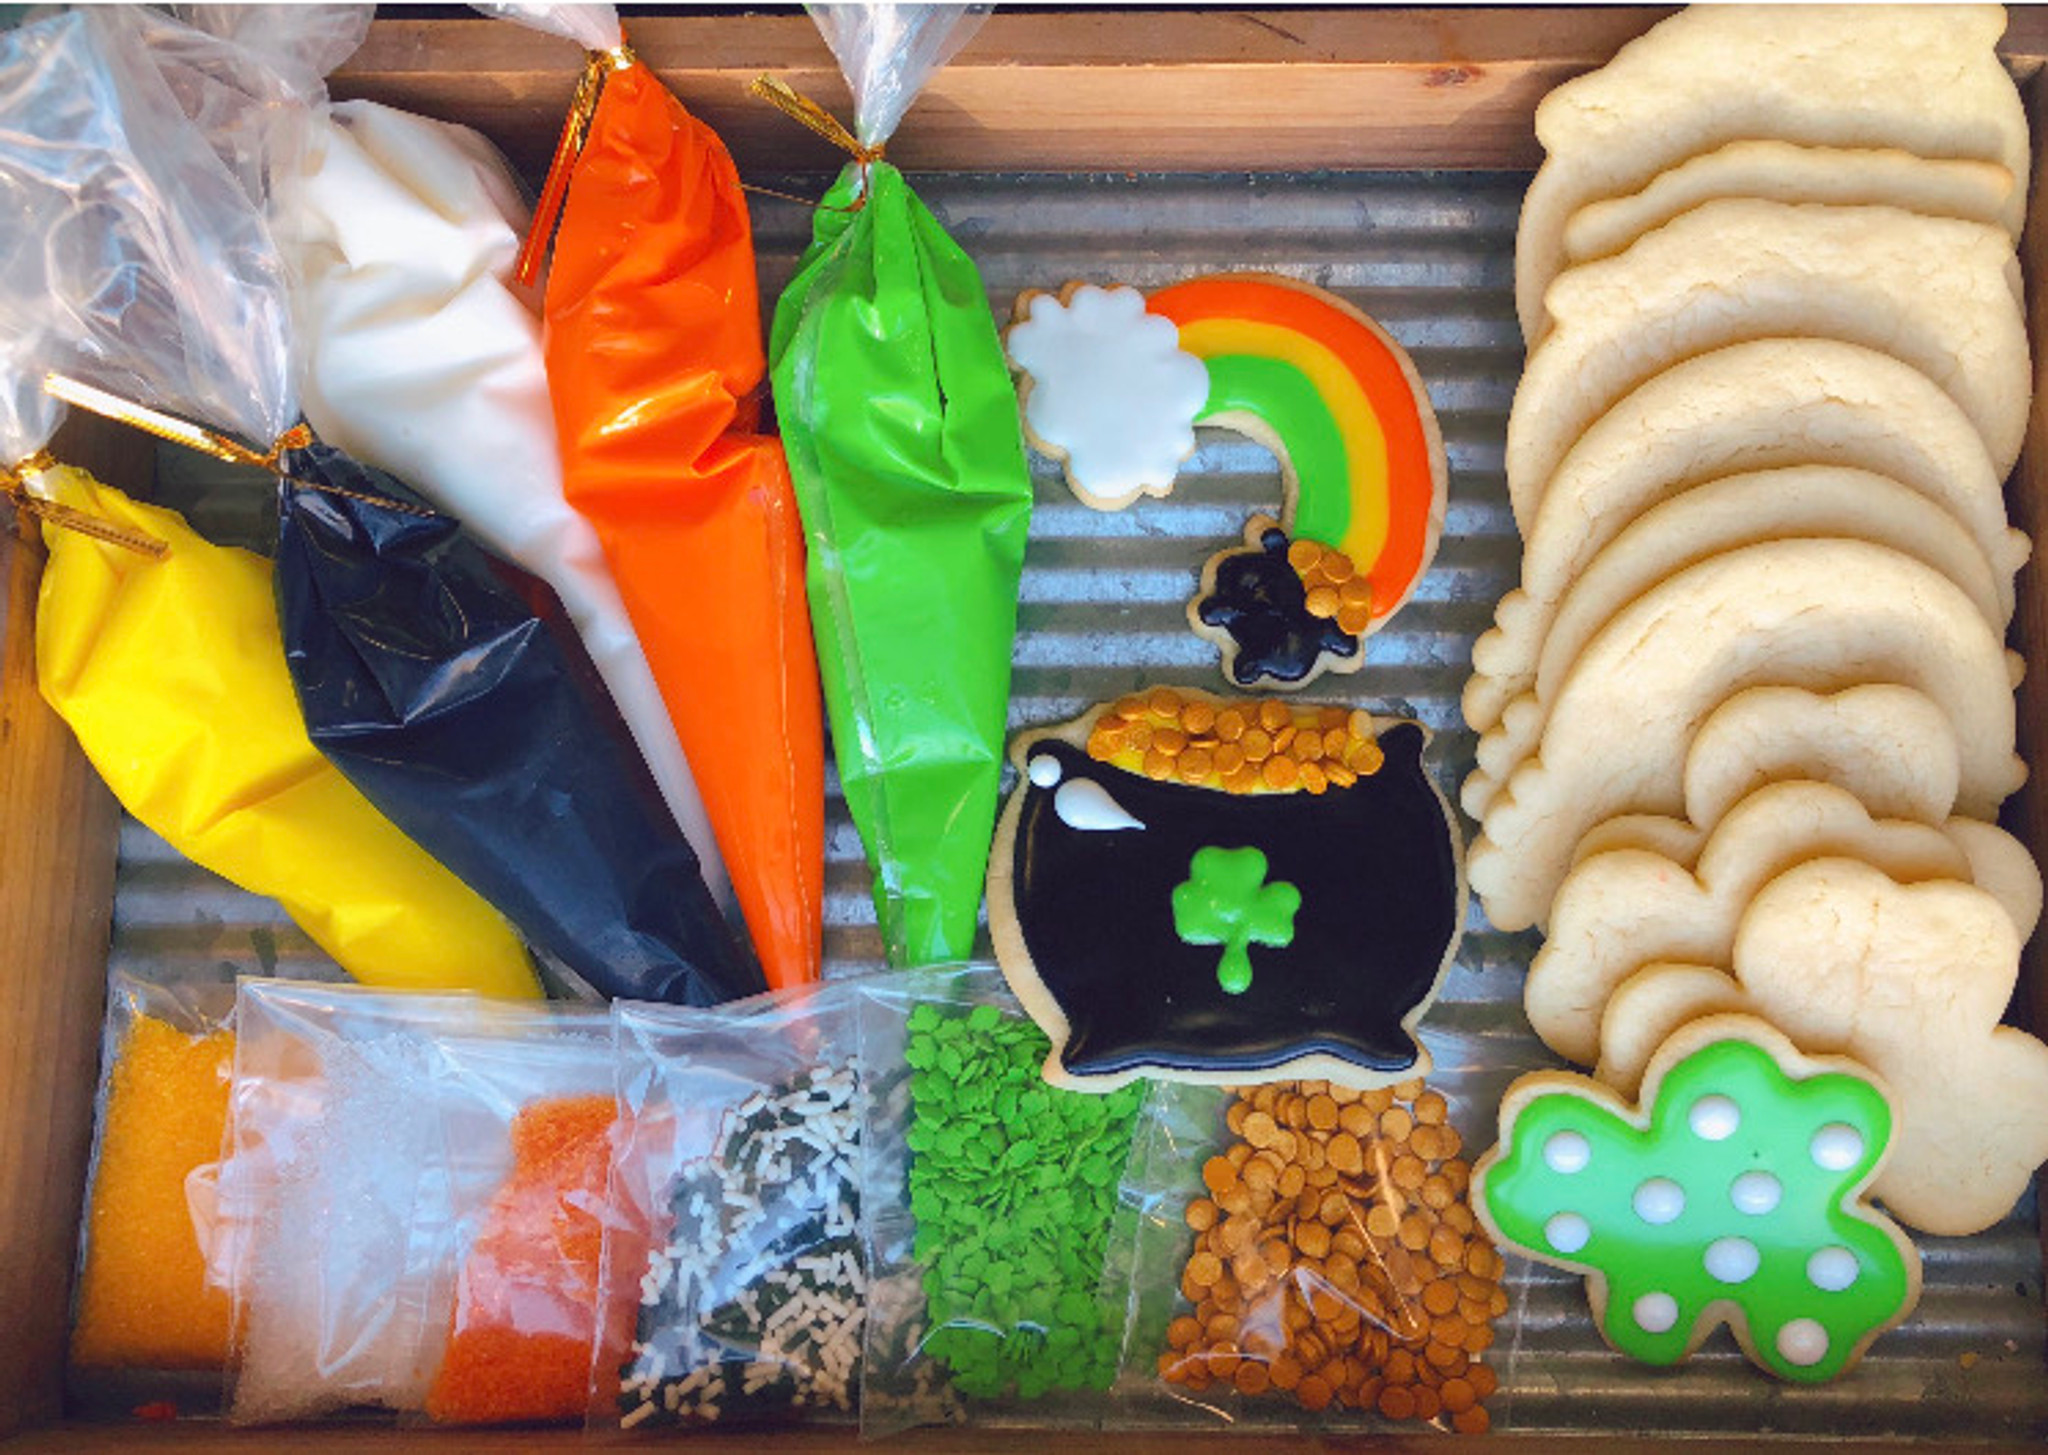 Sugar Cookie Decorating Kit - ICING